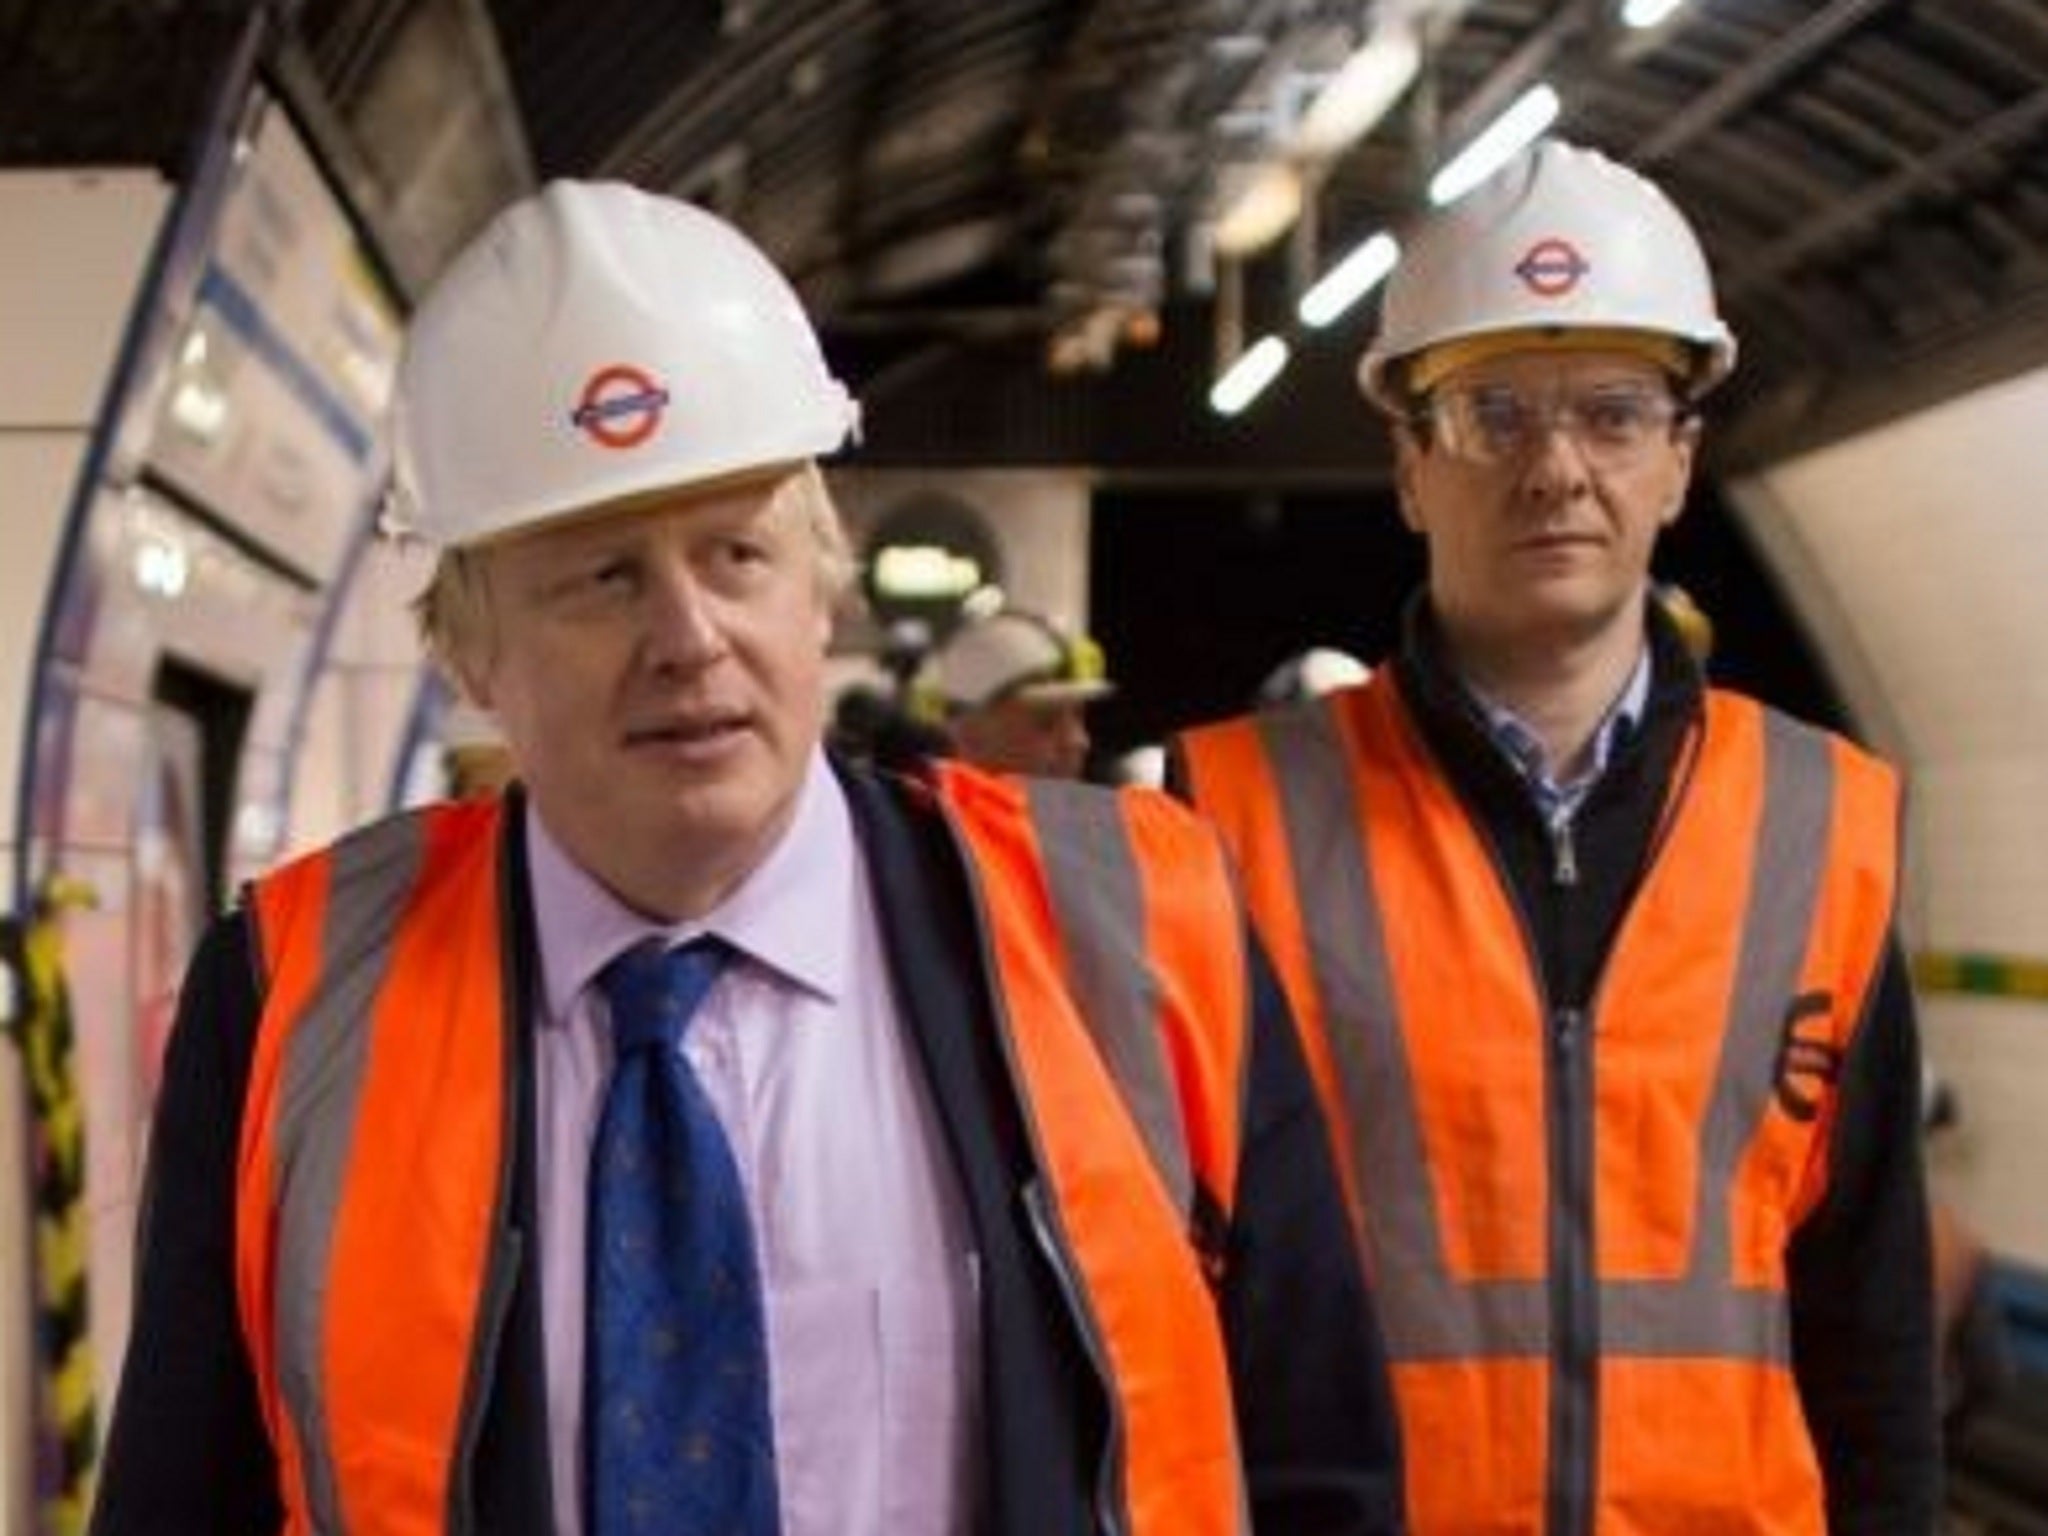 Boris Johnson and George Osborne at Victoria station